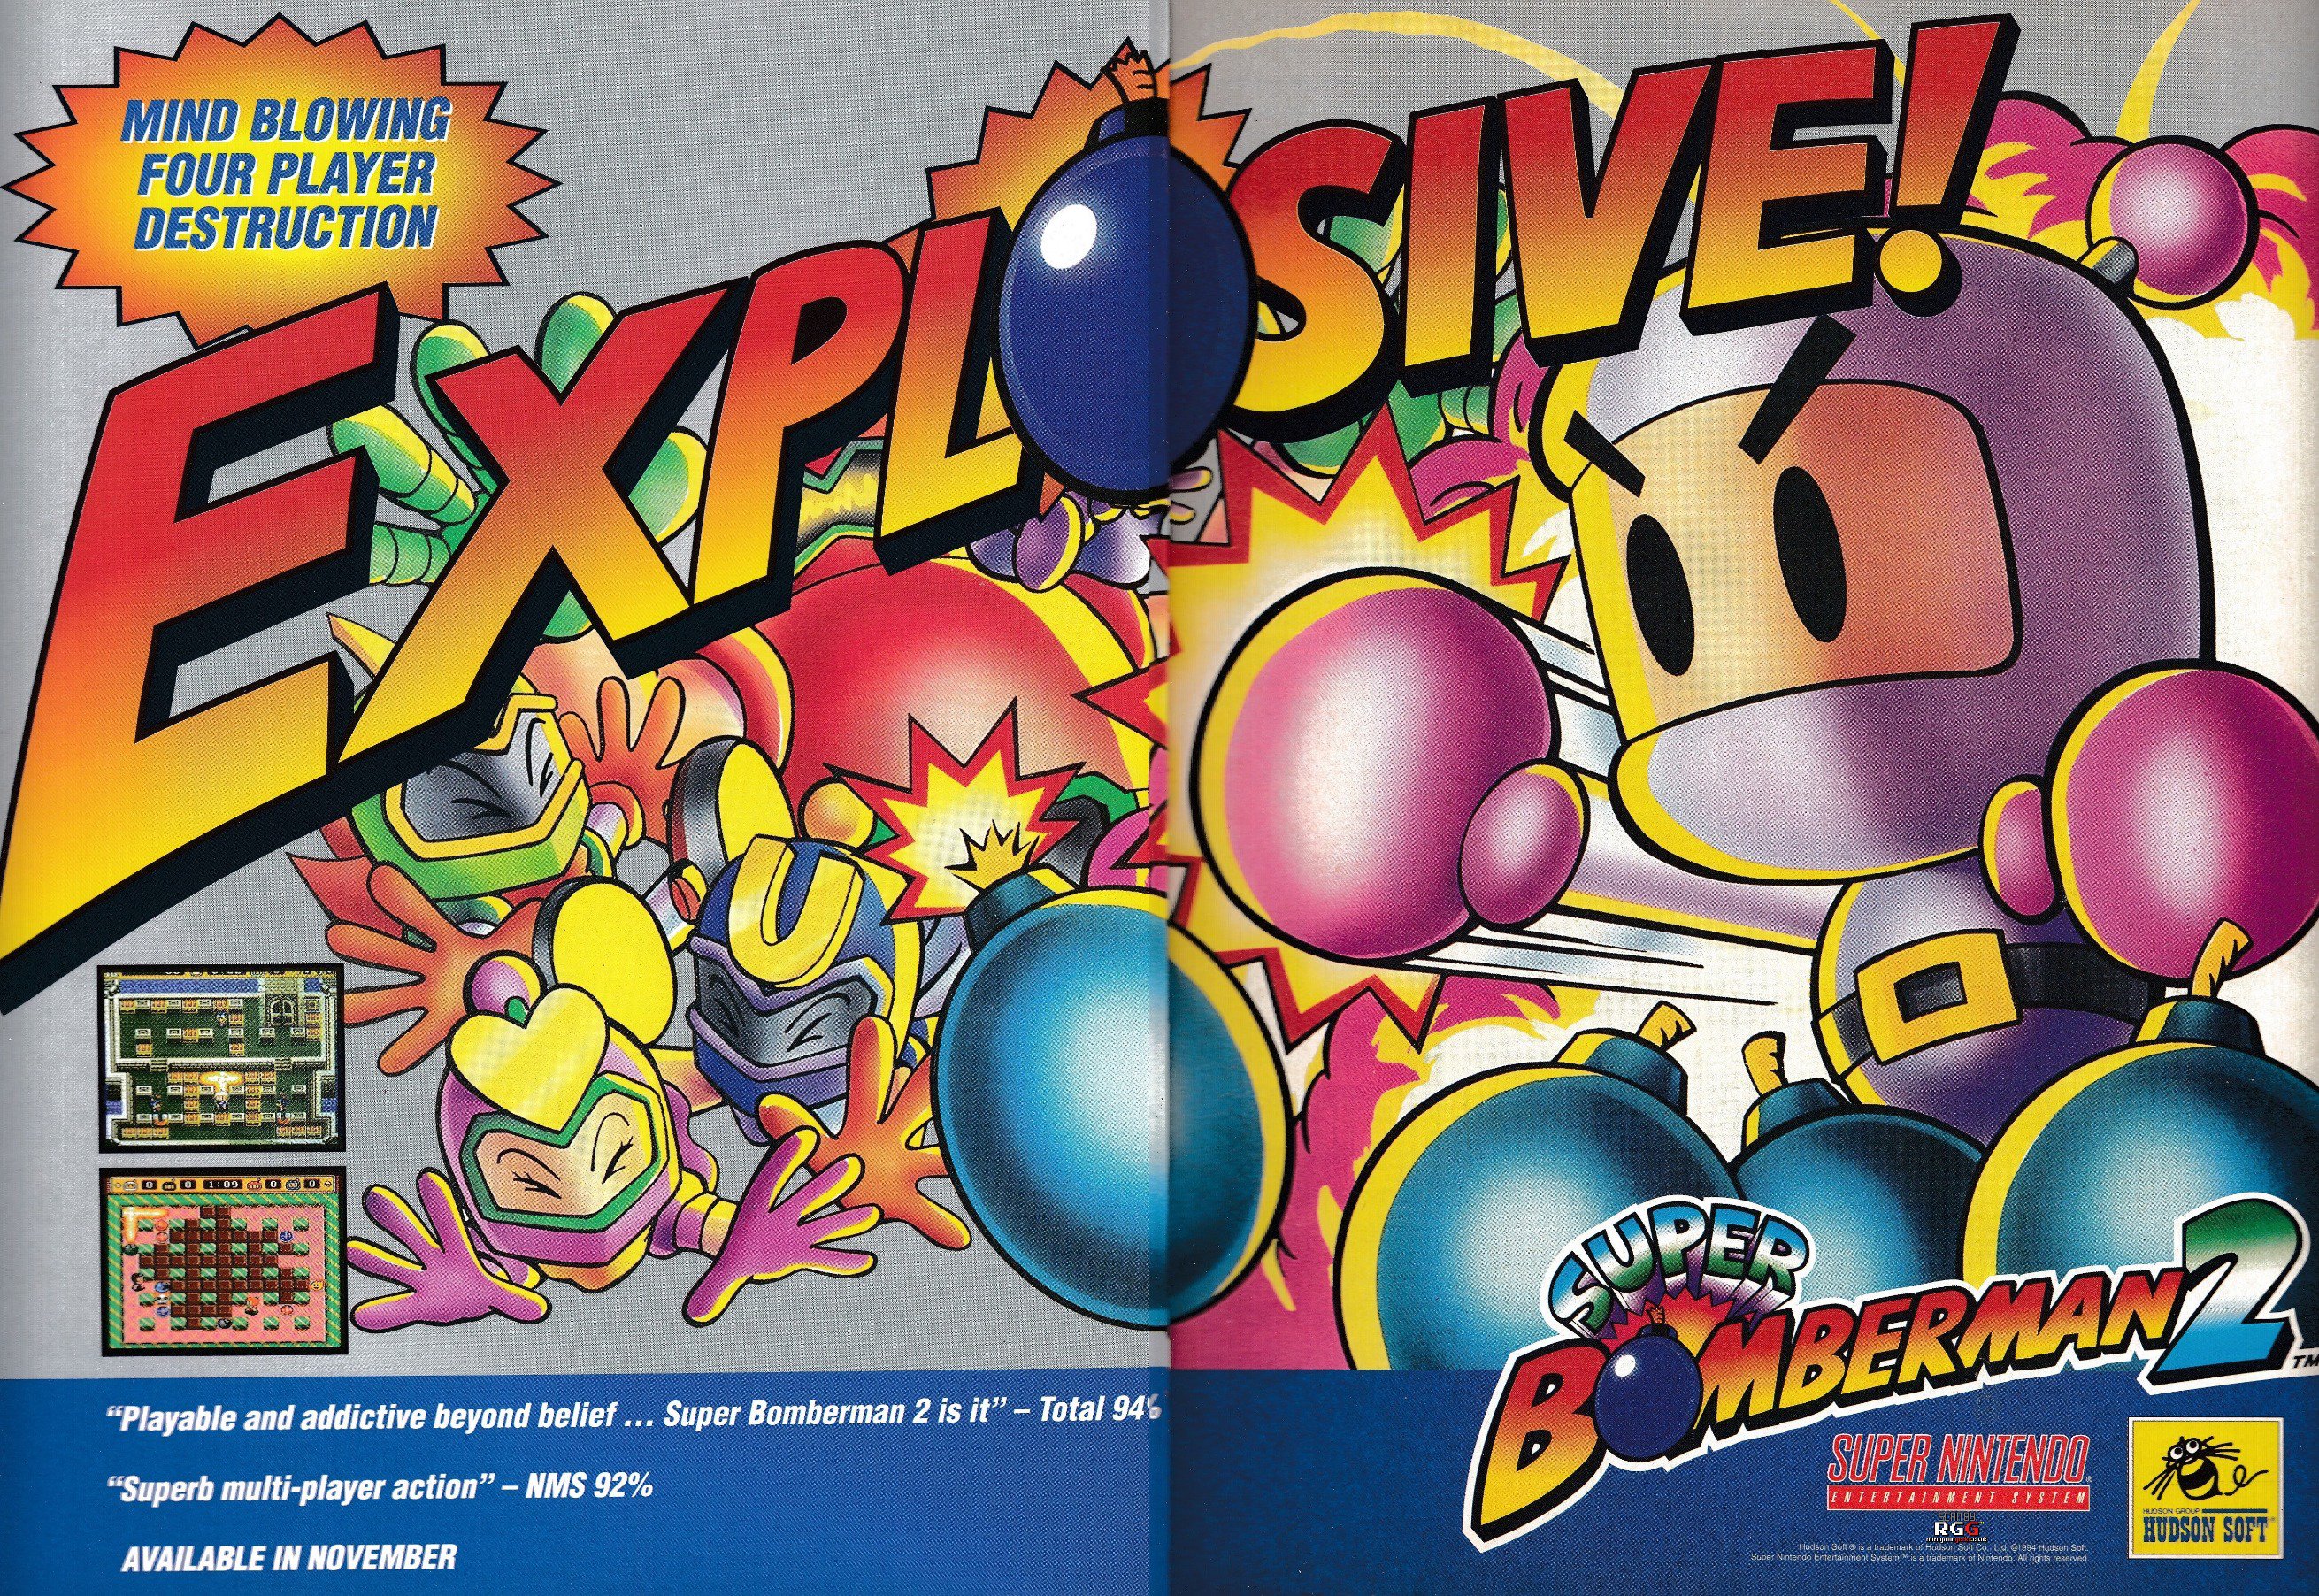 Super Bomberman 4 (SNES) Super Nintendo Game by Hudson / Produce